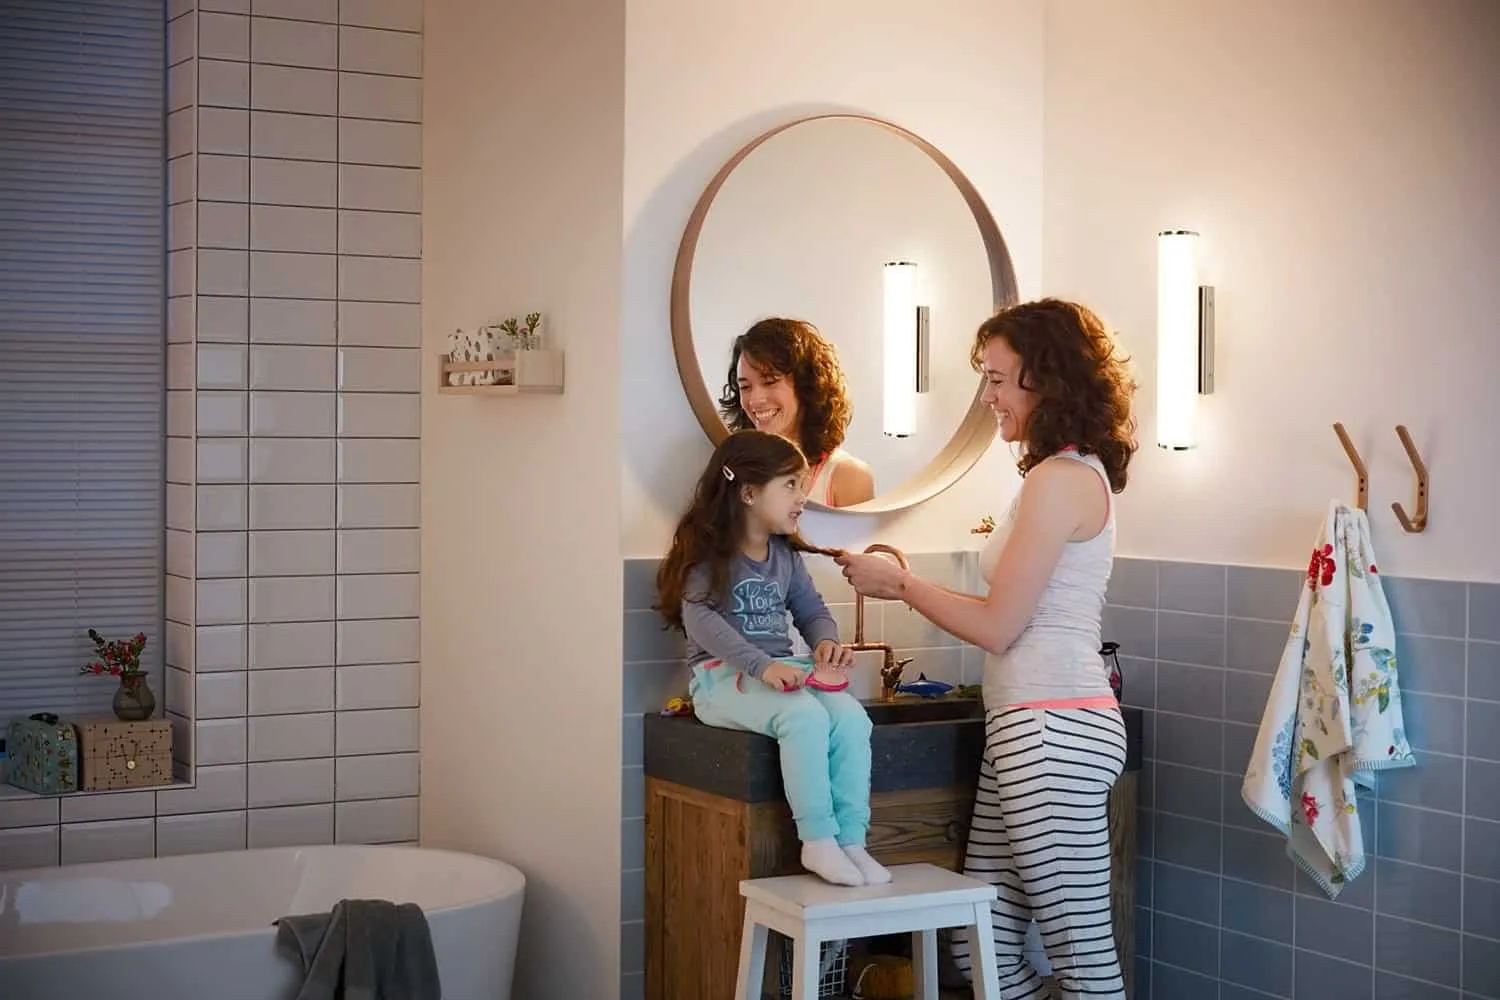 Philips LED bathroom lighting fixture for mirror vanity